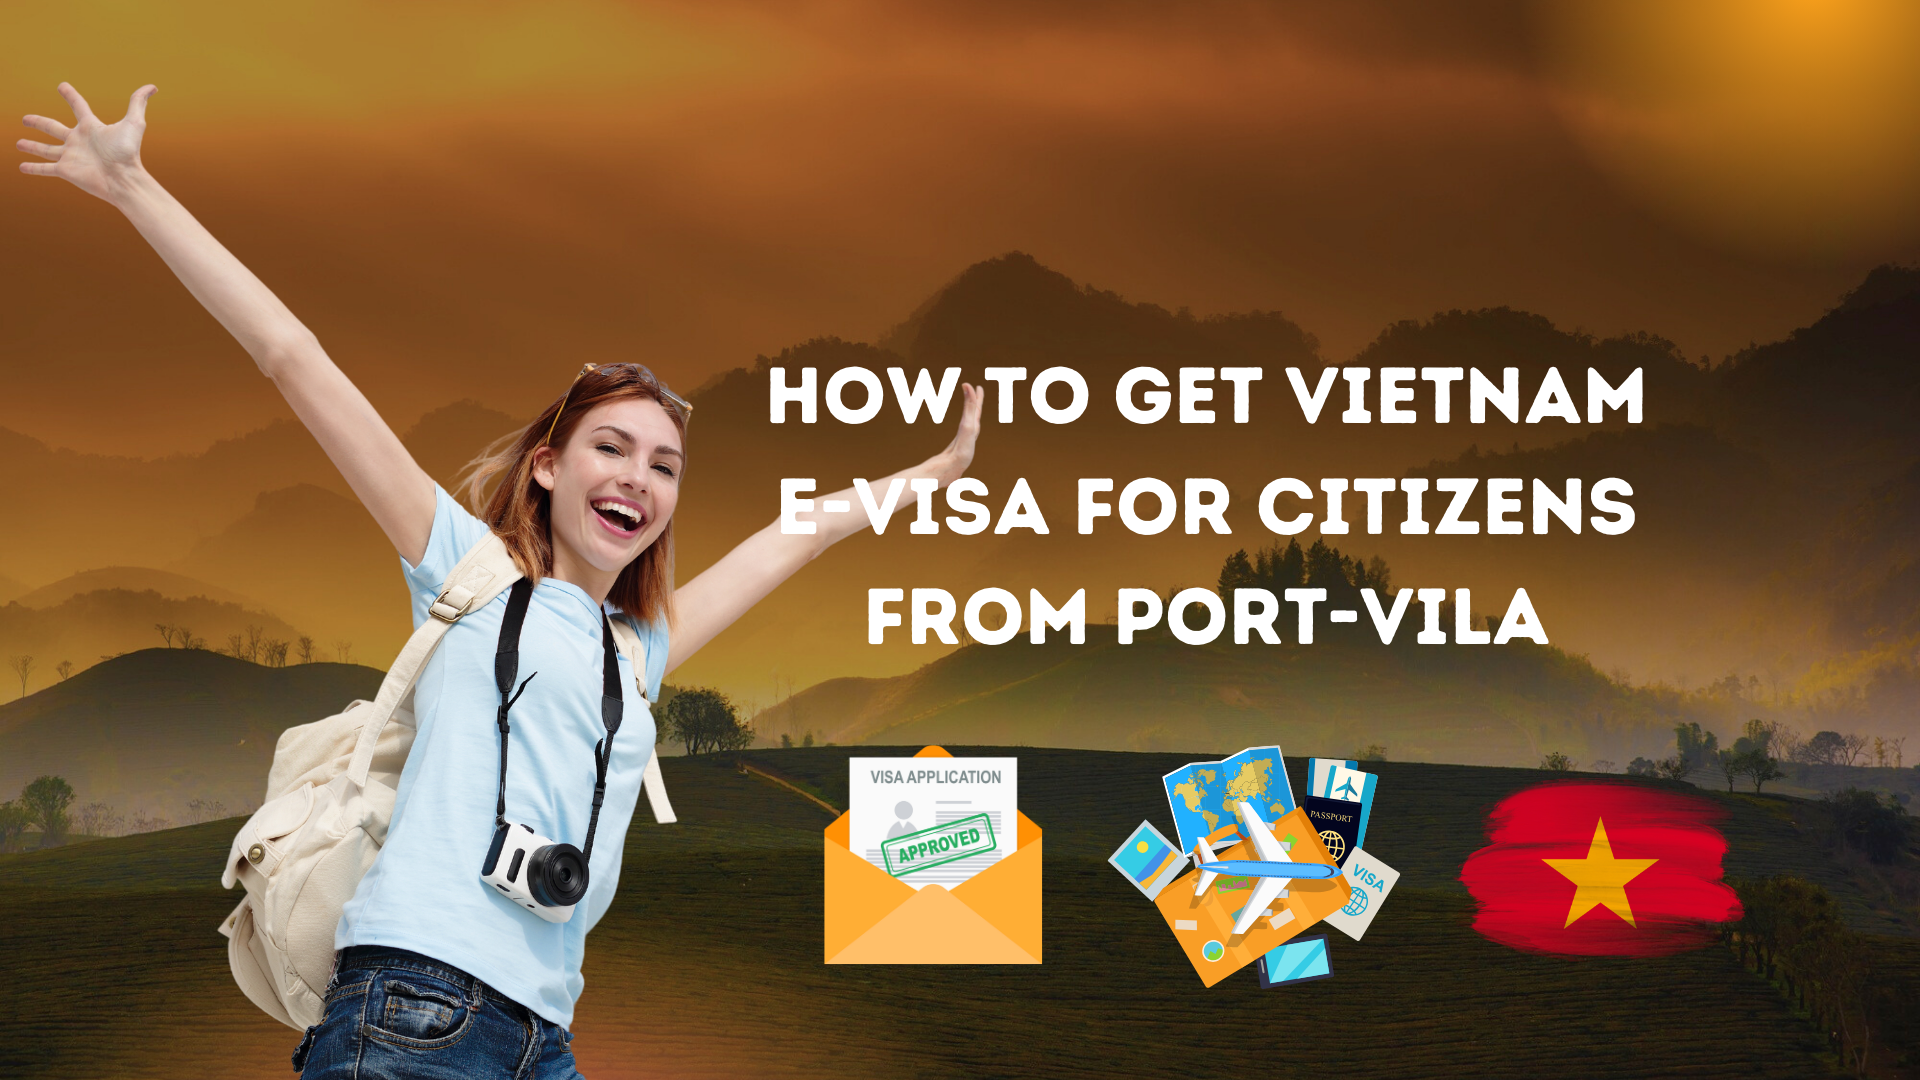 Vietnam Evisa for Citizens from Port-Vila